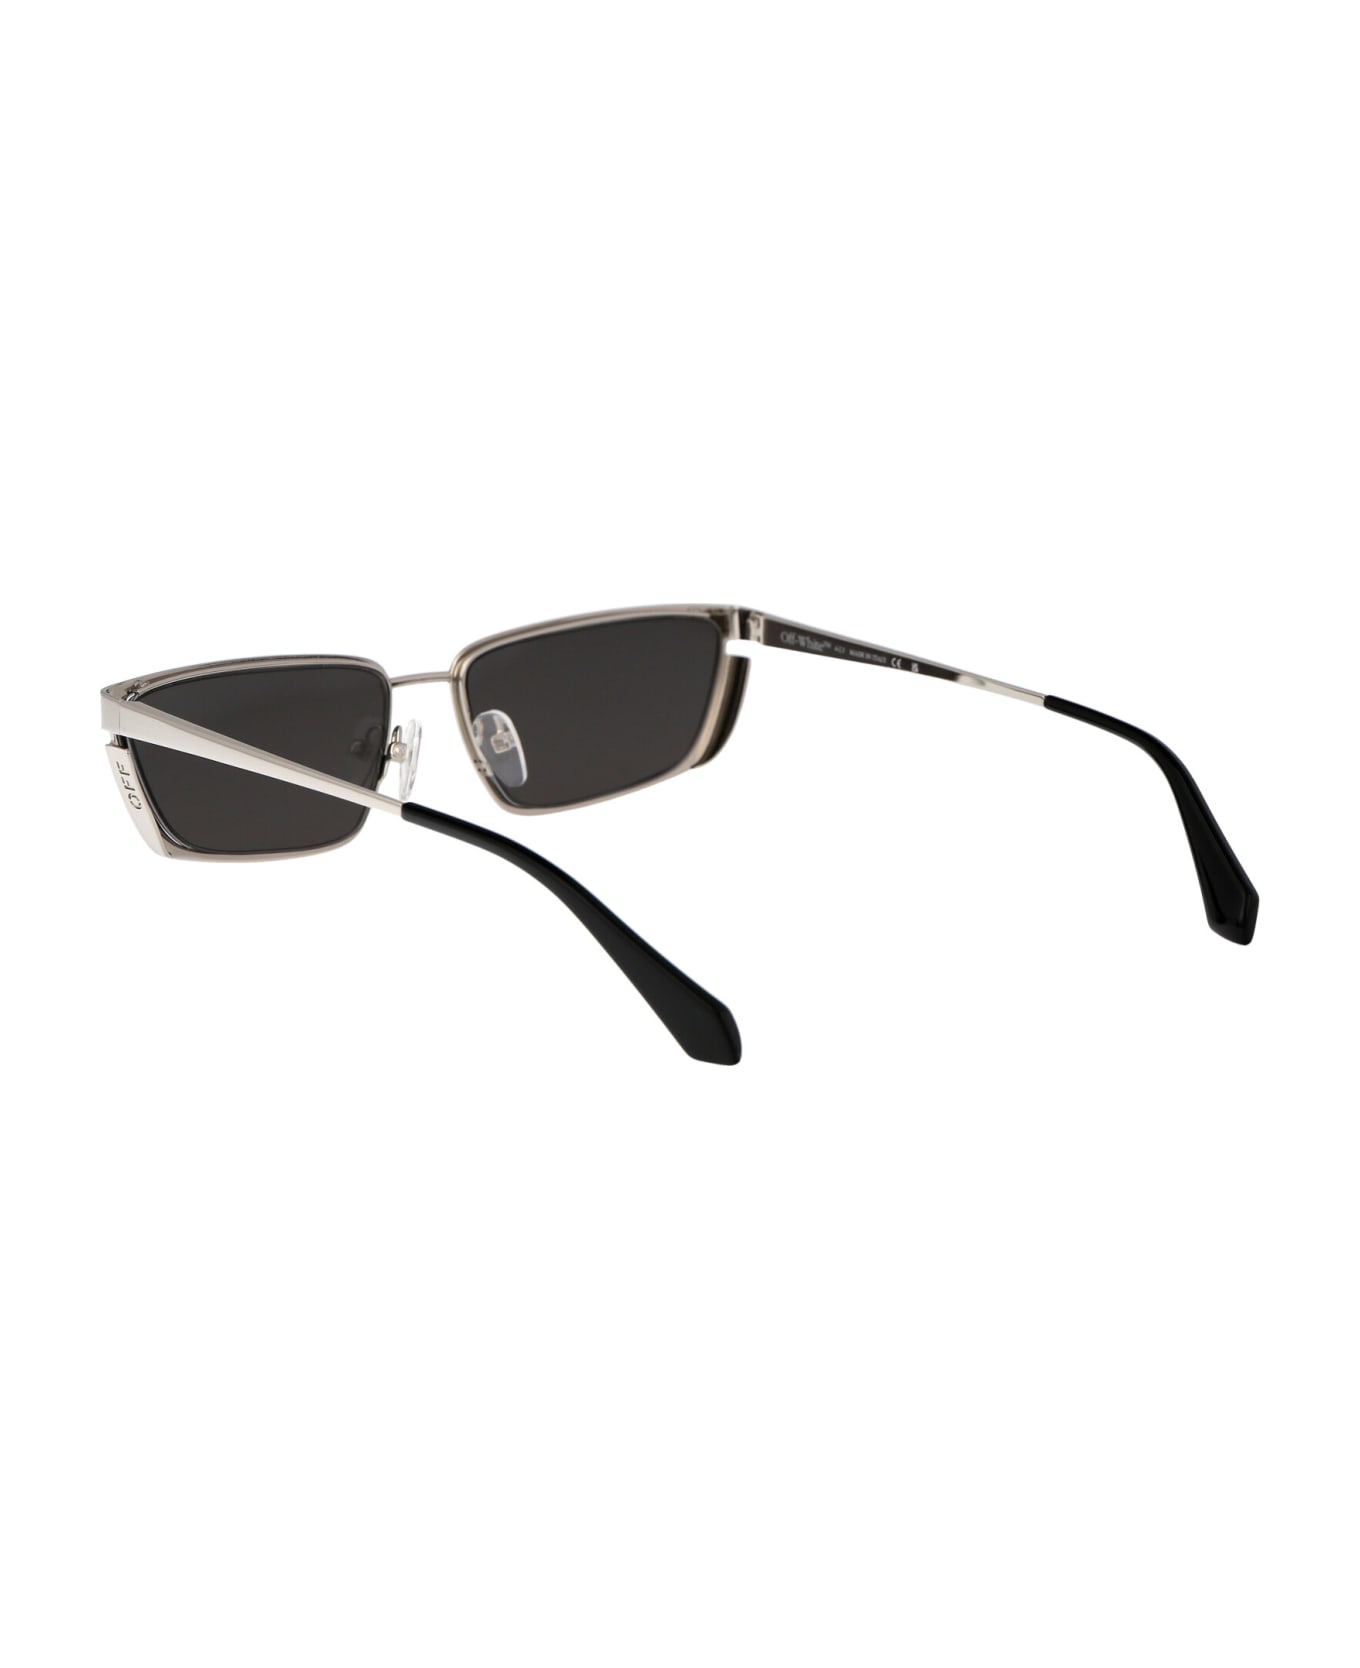 Off-White Richfield Sunglasses - 7207 SILVER サングラス